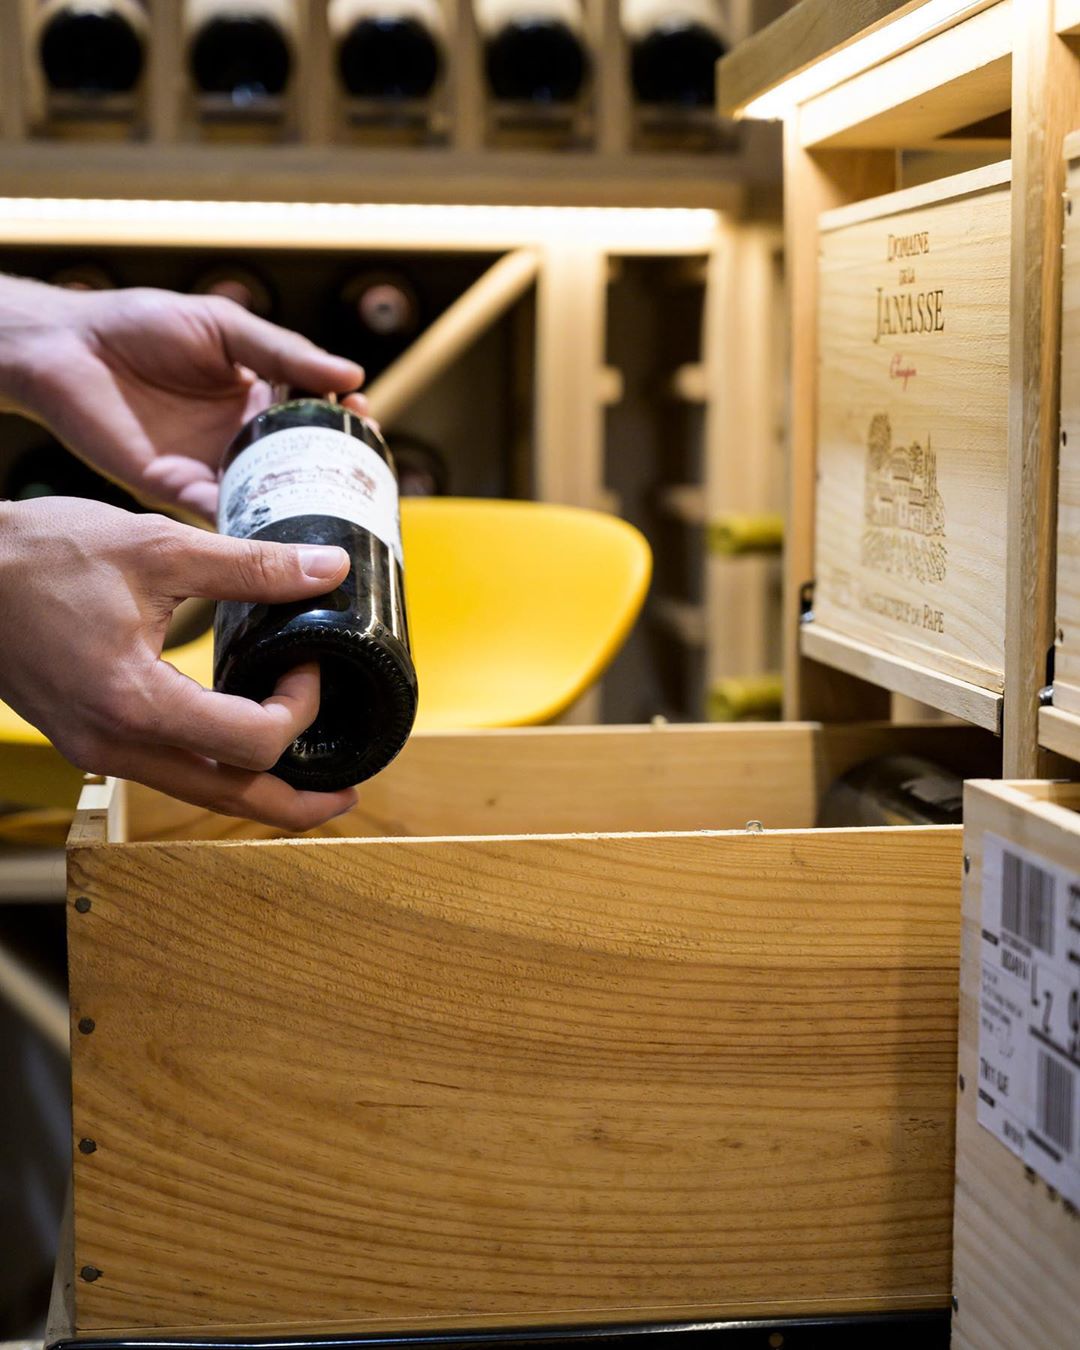 Hands putting wine bottle into wine storage box. Photo by Instagram user @sorrells_wineracks